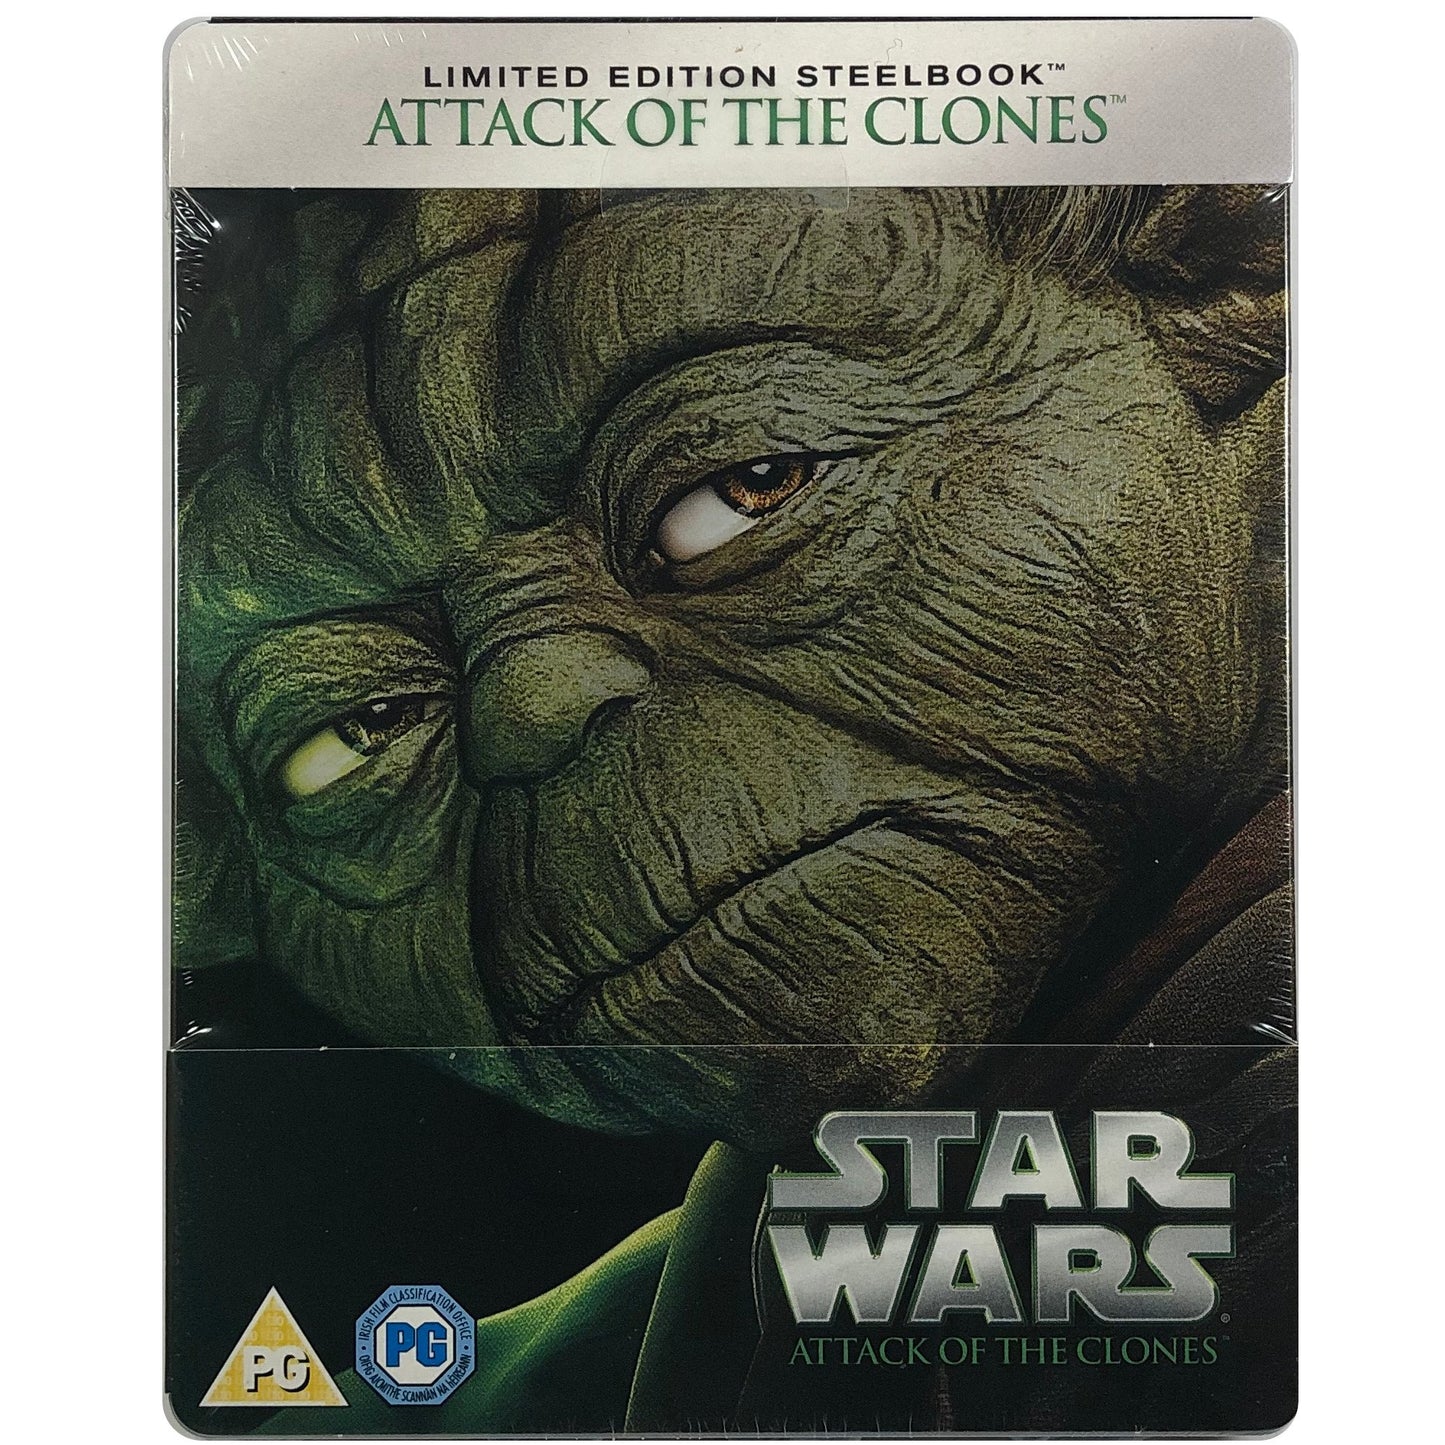 Star Wars: Episode II - Attack of the Clones Blu-Ray Steelbook